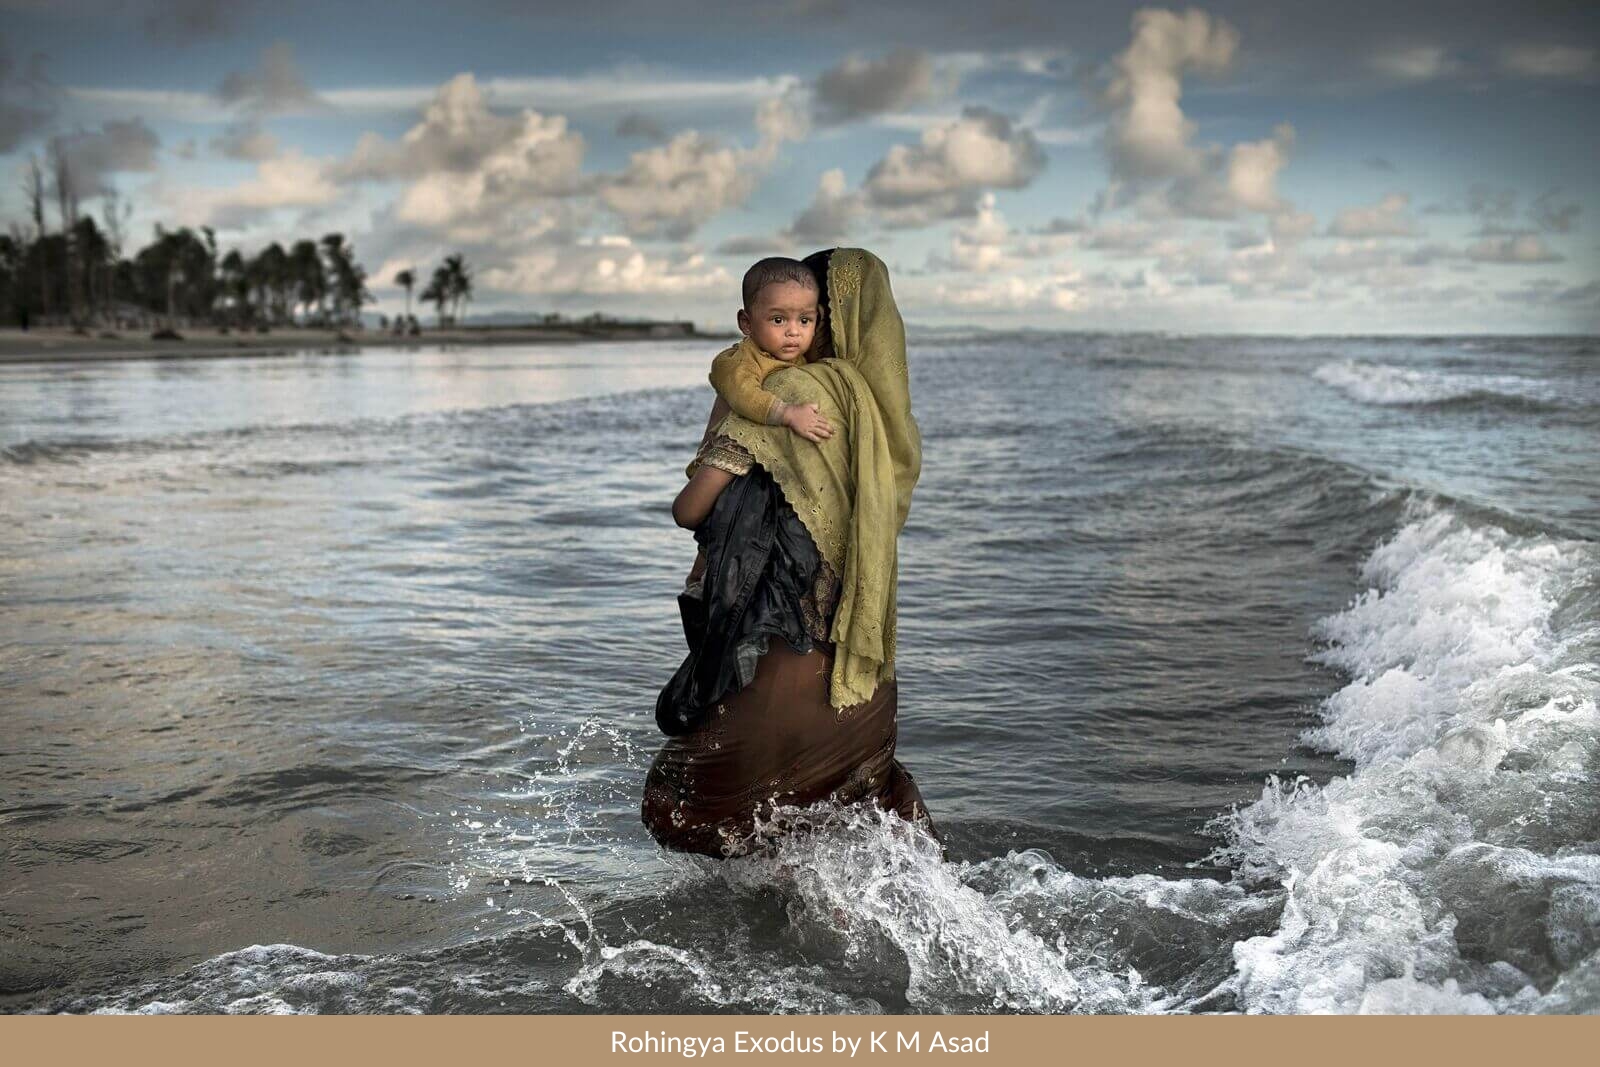 Rohingya Exodus by K M Asad